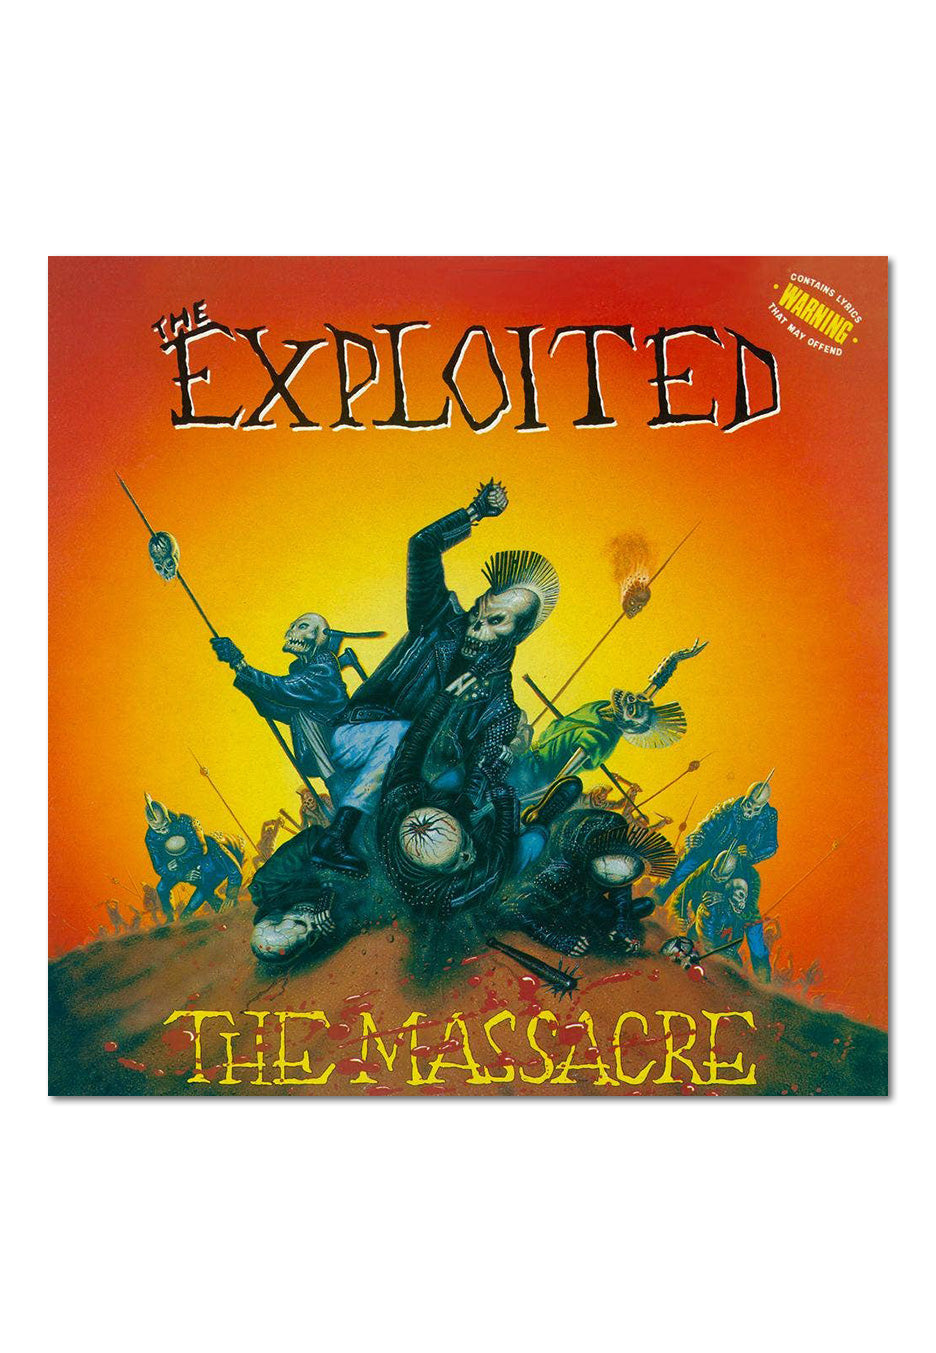 The Exploited - The Massacre Special Edition - Digipak CD